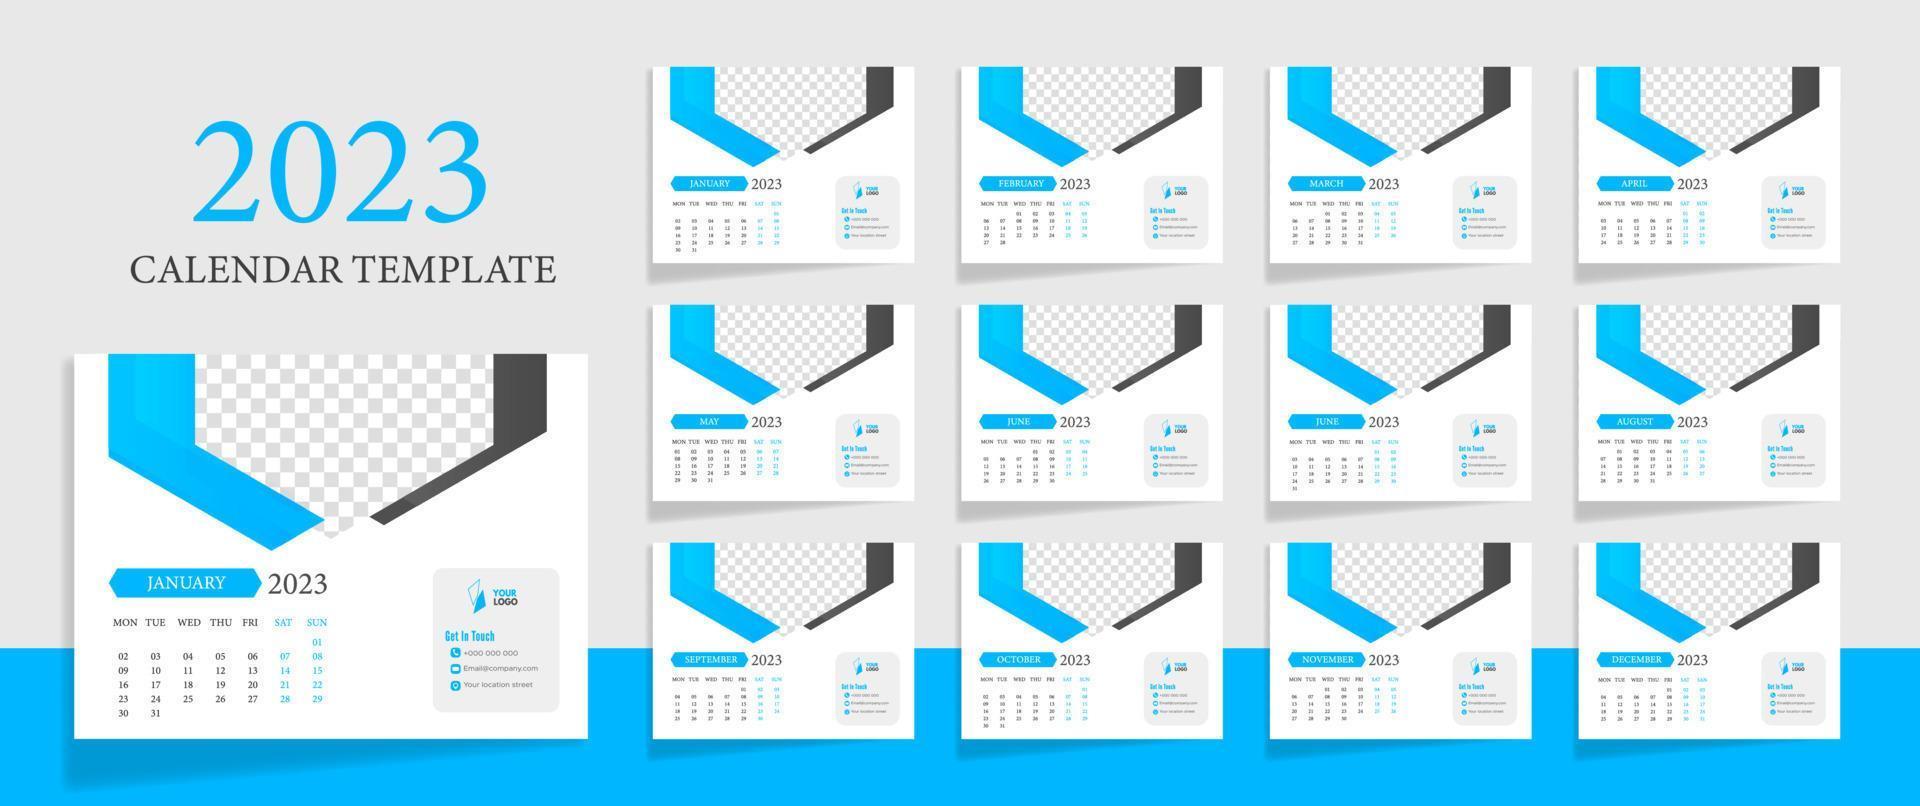 Desk calendar 2023 business template vector illustration